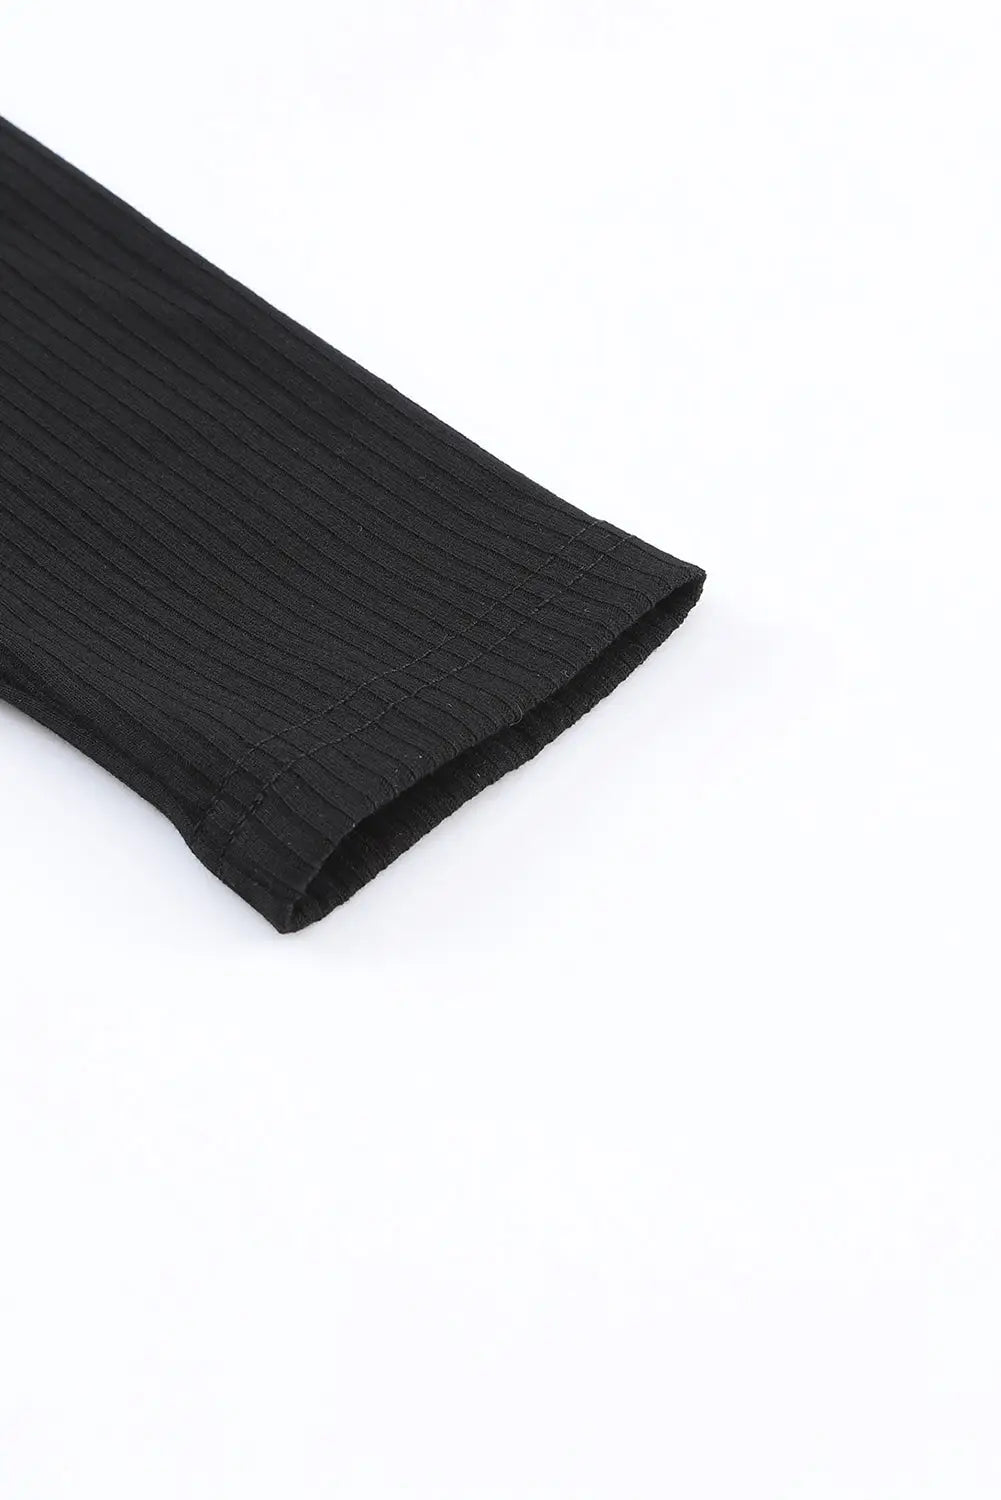 Black solid color ribbed crop top long pants set - loungewear